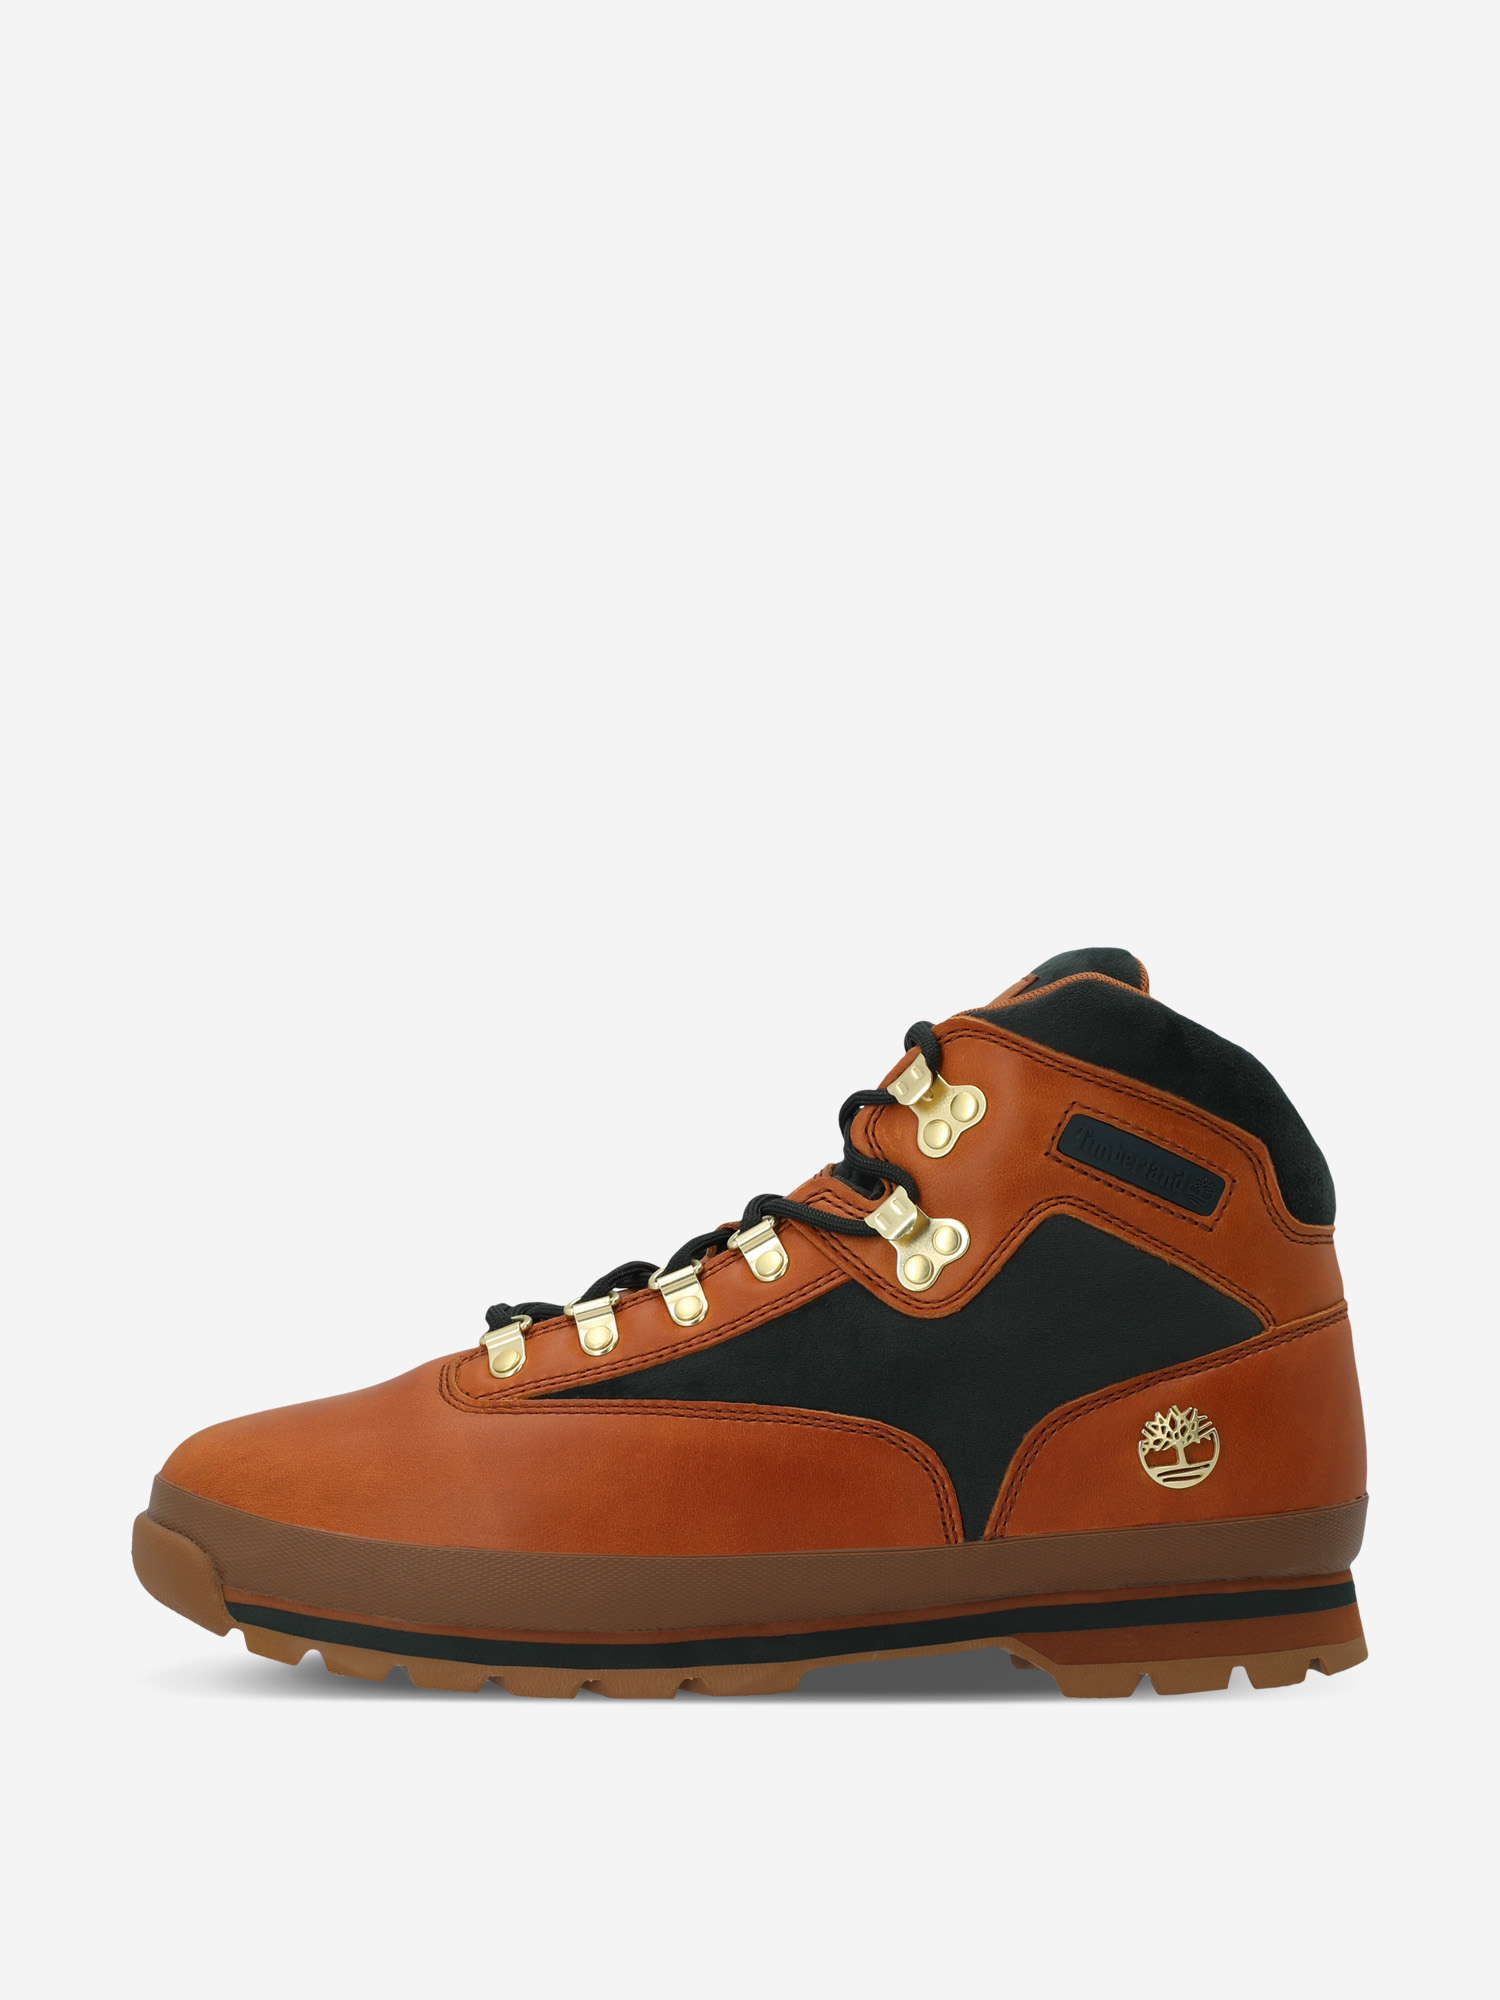 Ботинки мужские Timberland Euro Hiker, Коричневый полуботинки для мальчиков northland fly hiker jr коричневый